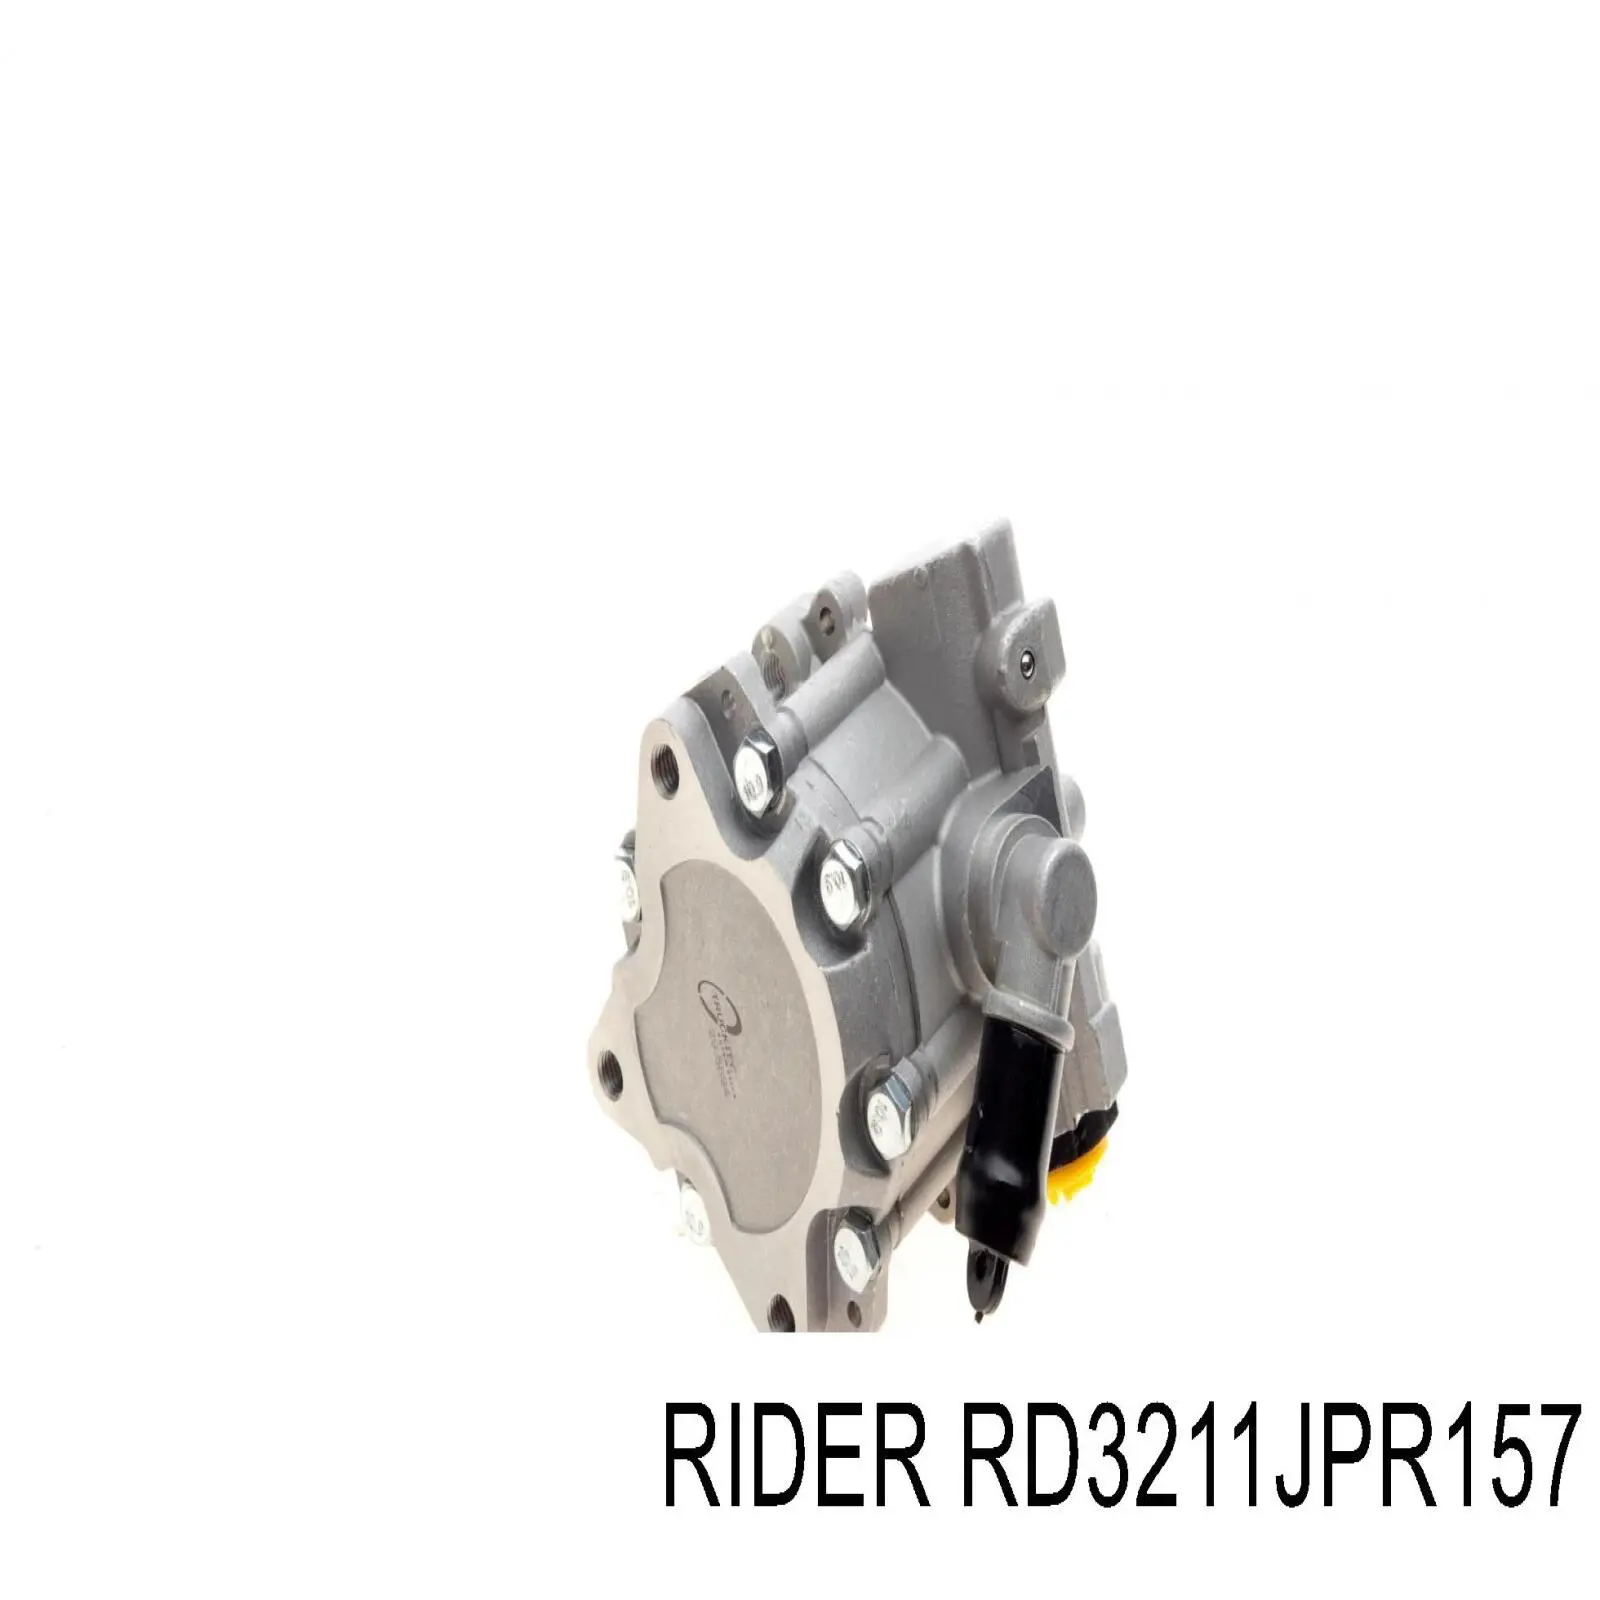 RD3211JPR157 Rider bomba de dirección